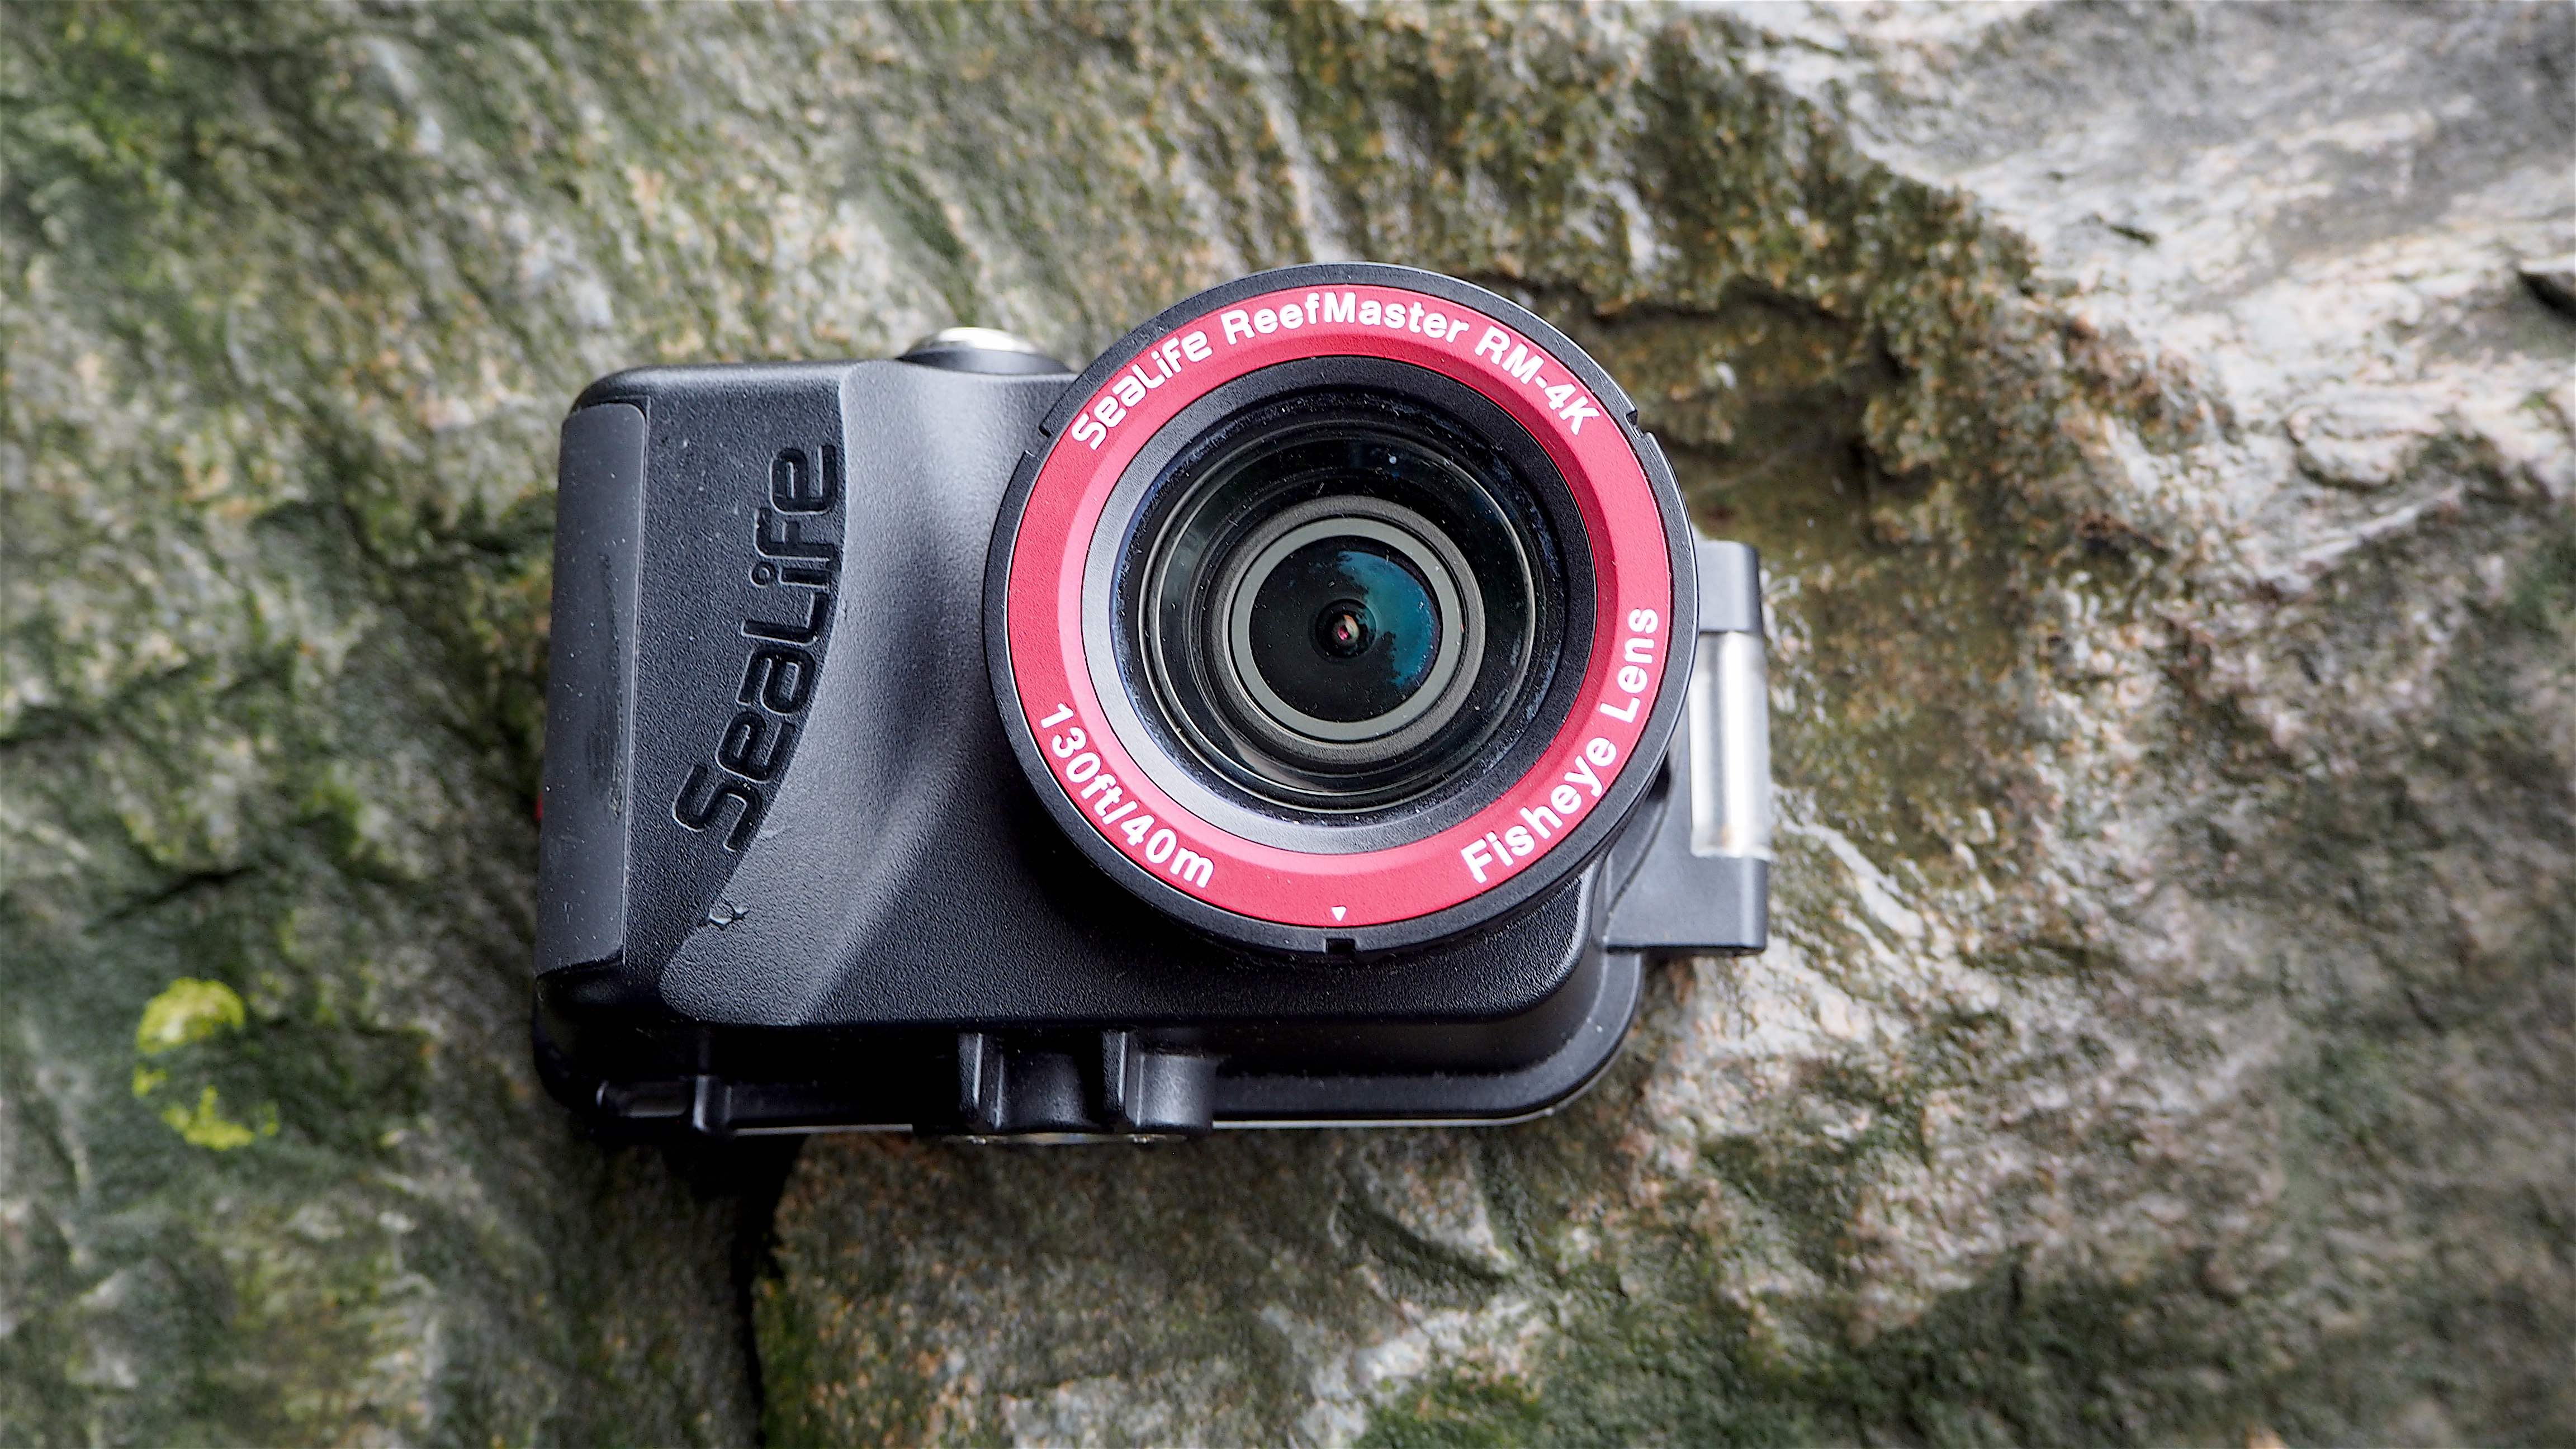 SeaLife ReefMaster RM-4K waterproof camera on a stony waterside